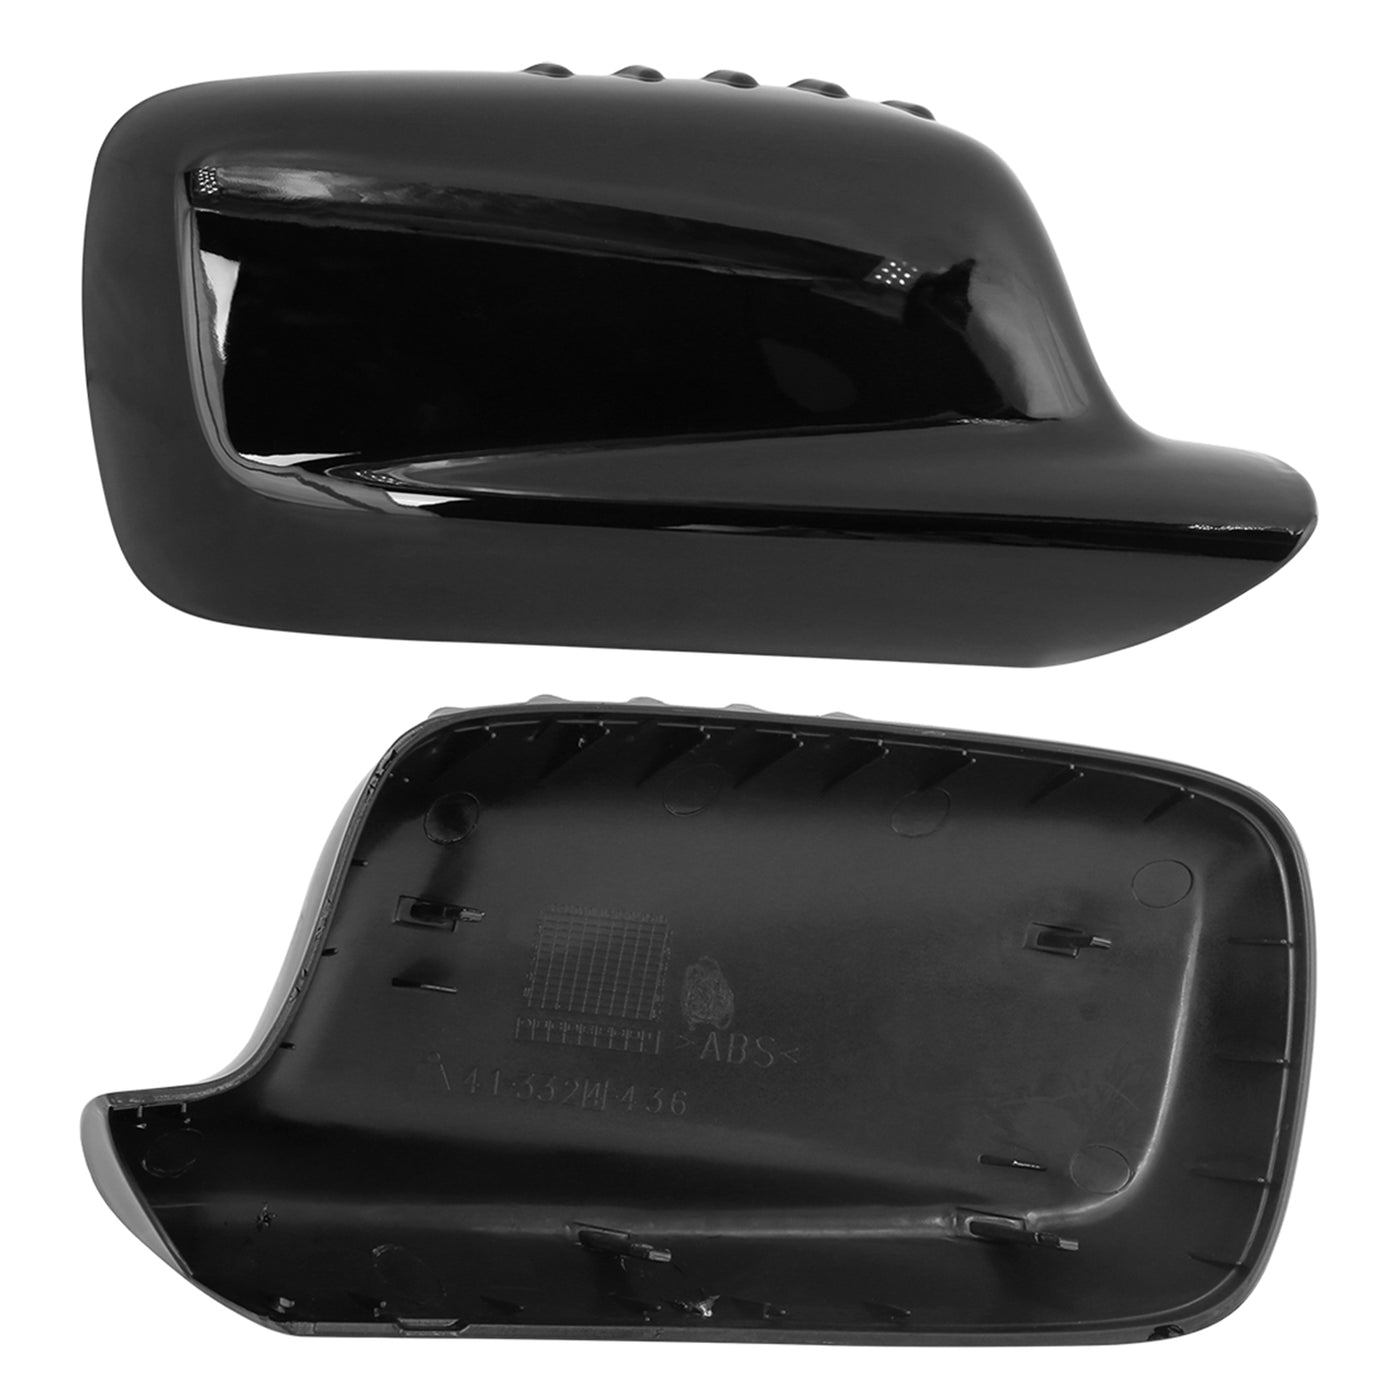 X AUTOHAUX 2Pcs Car Mirror Covering Cap Replacement for BMW E46 E65 E66 745i 750i 323Ci 325Ci 328Ci Gloss Black 51167074236,51167074235